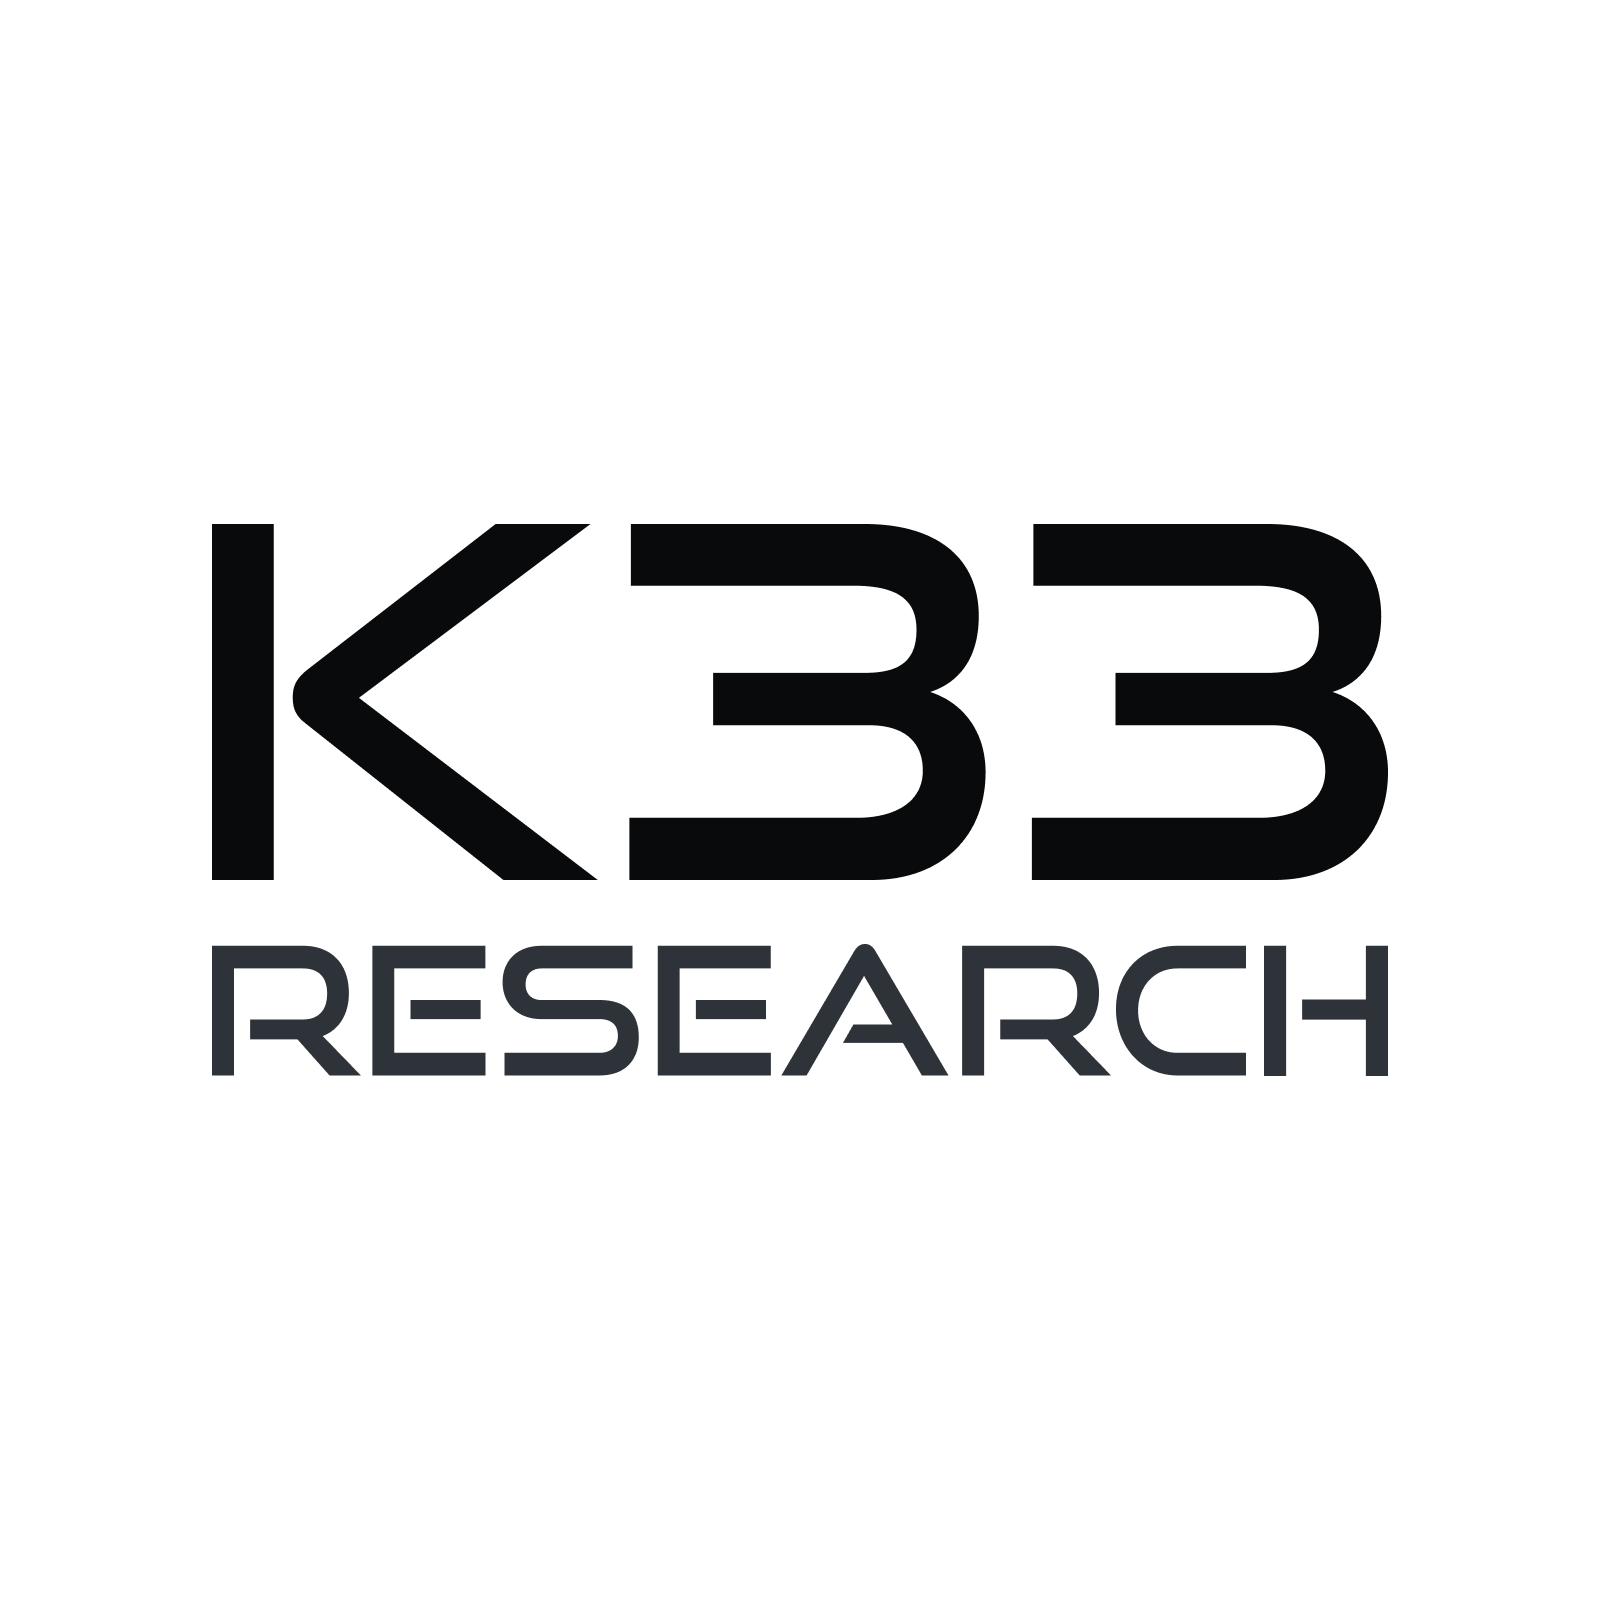 K33 Research